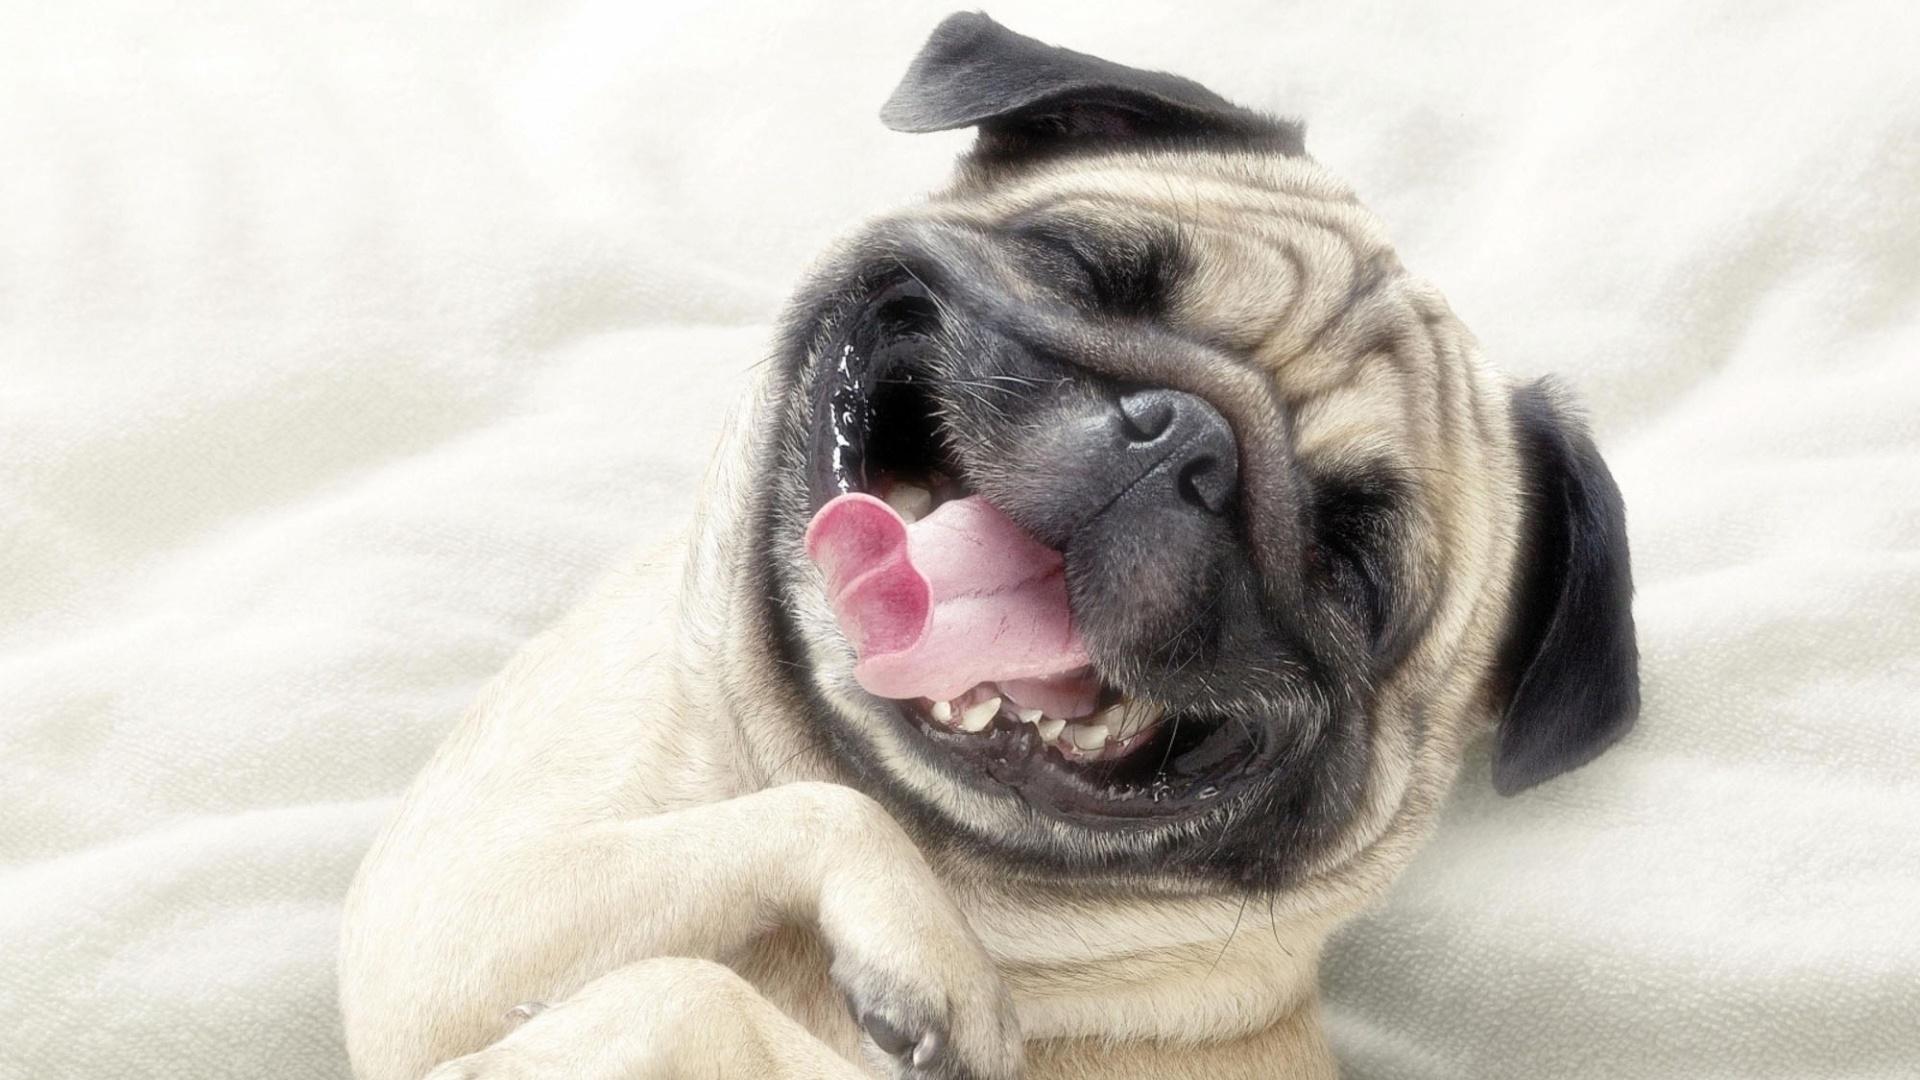 Smile Dog HD Wallpaper, Background Image